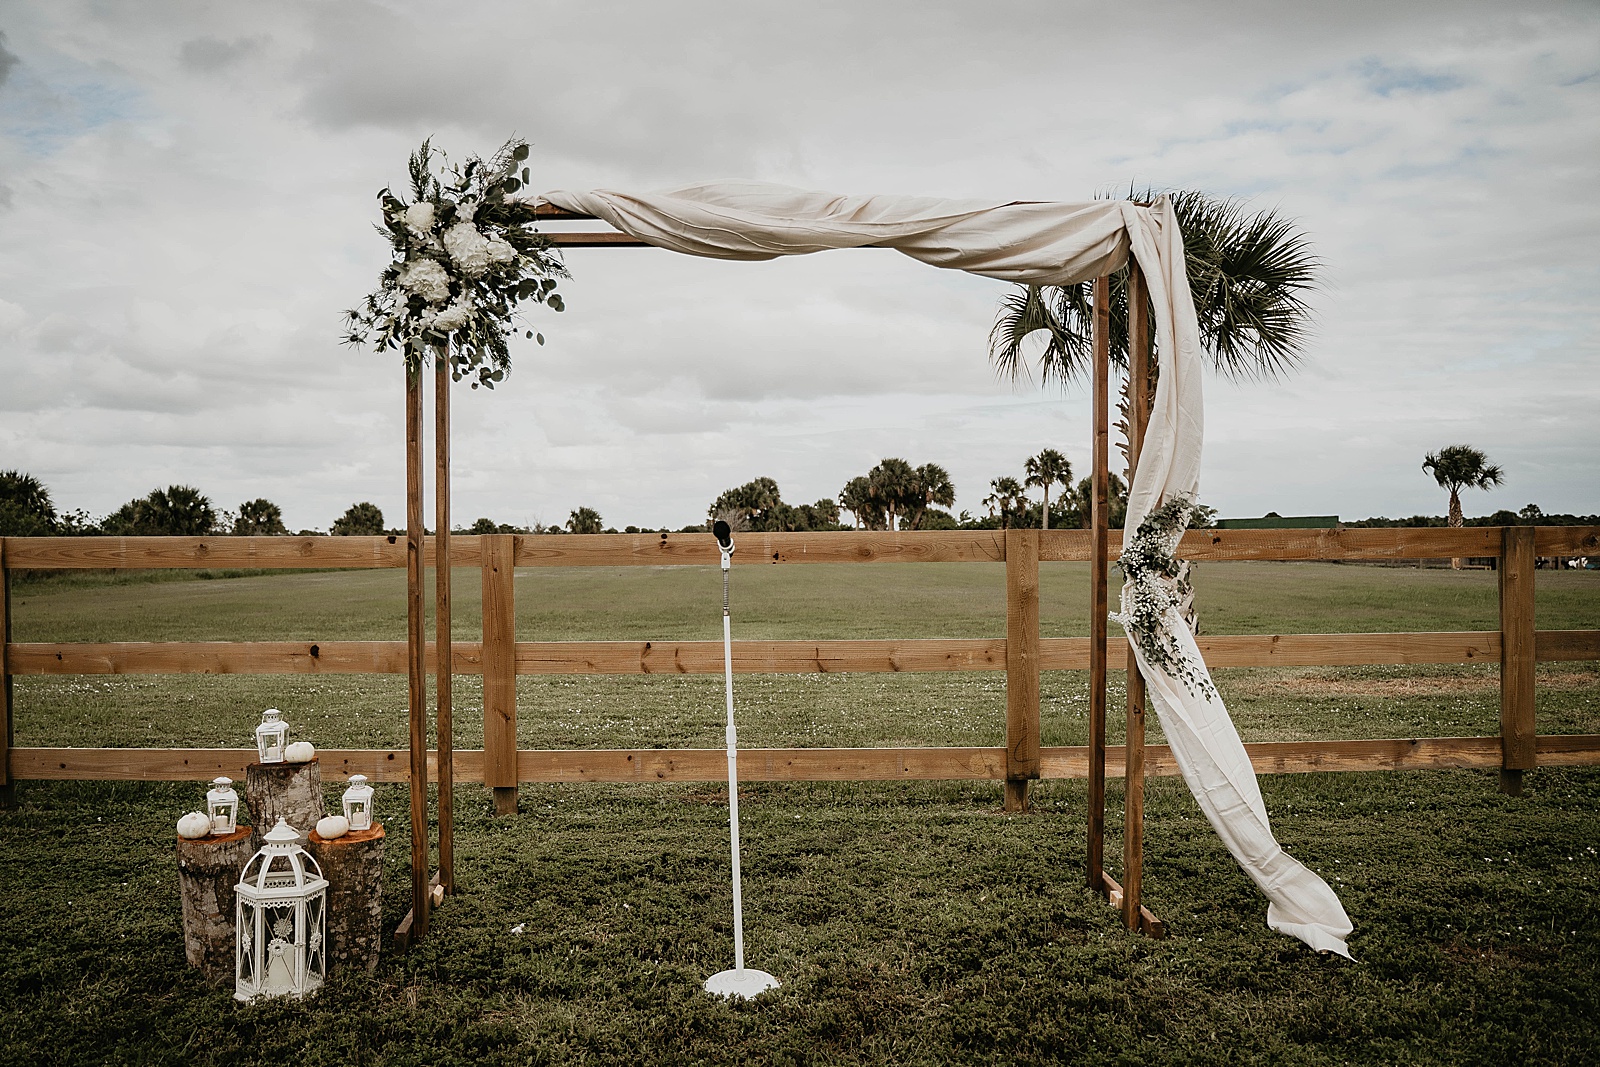 Rustic Fall South Florida Wedding Photos captured by South Florida Wedding Photographer, Krystal Capone Photography